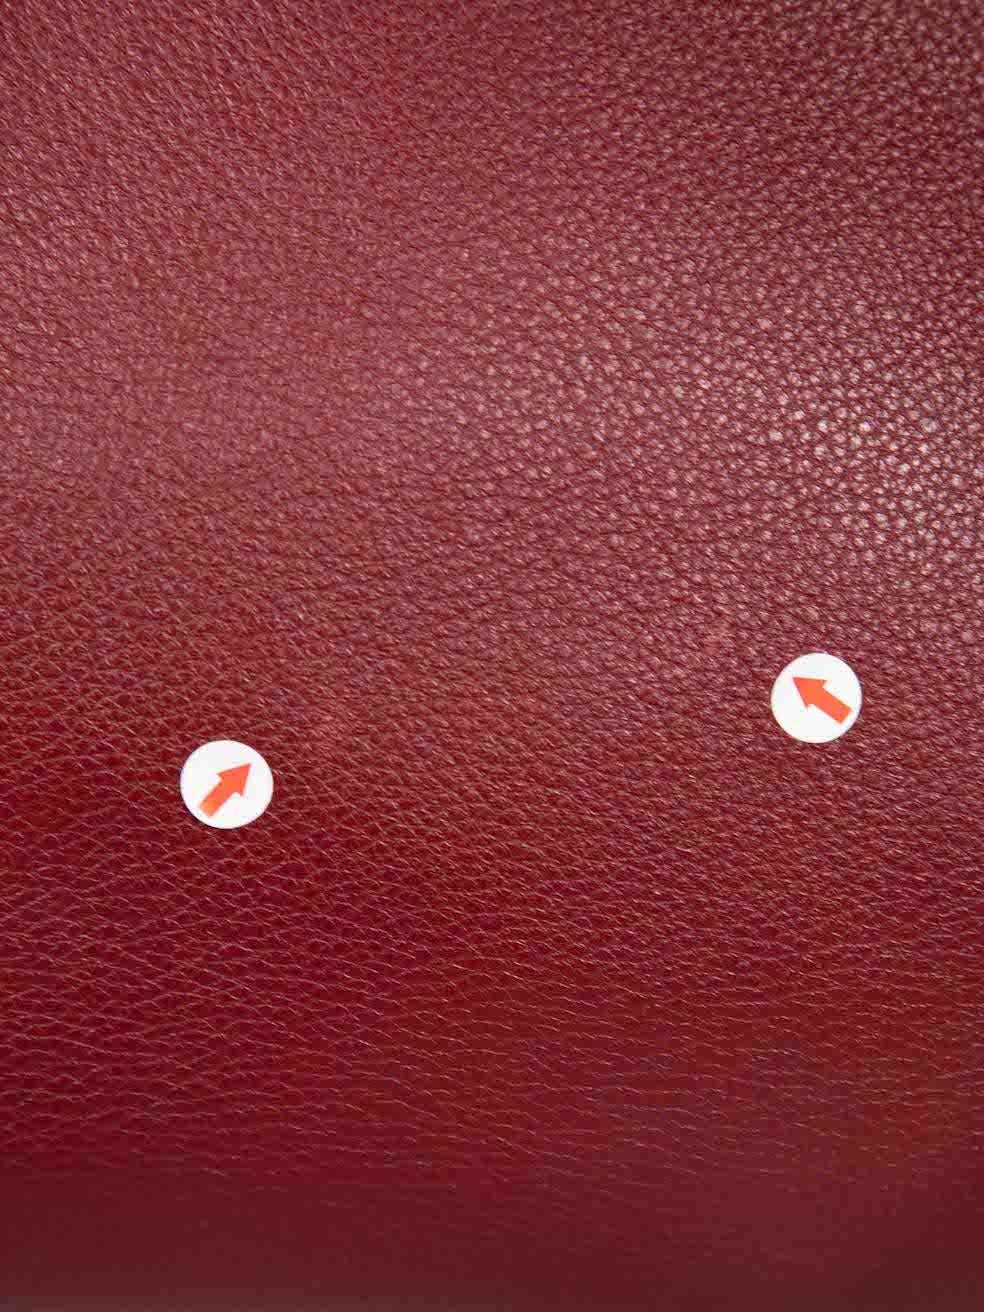 Cartier Red Leather C de Cartier Handbag For Sale 3